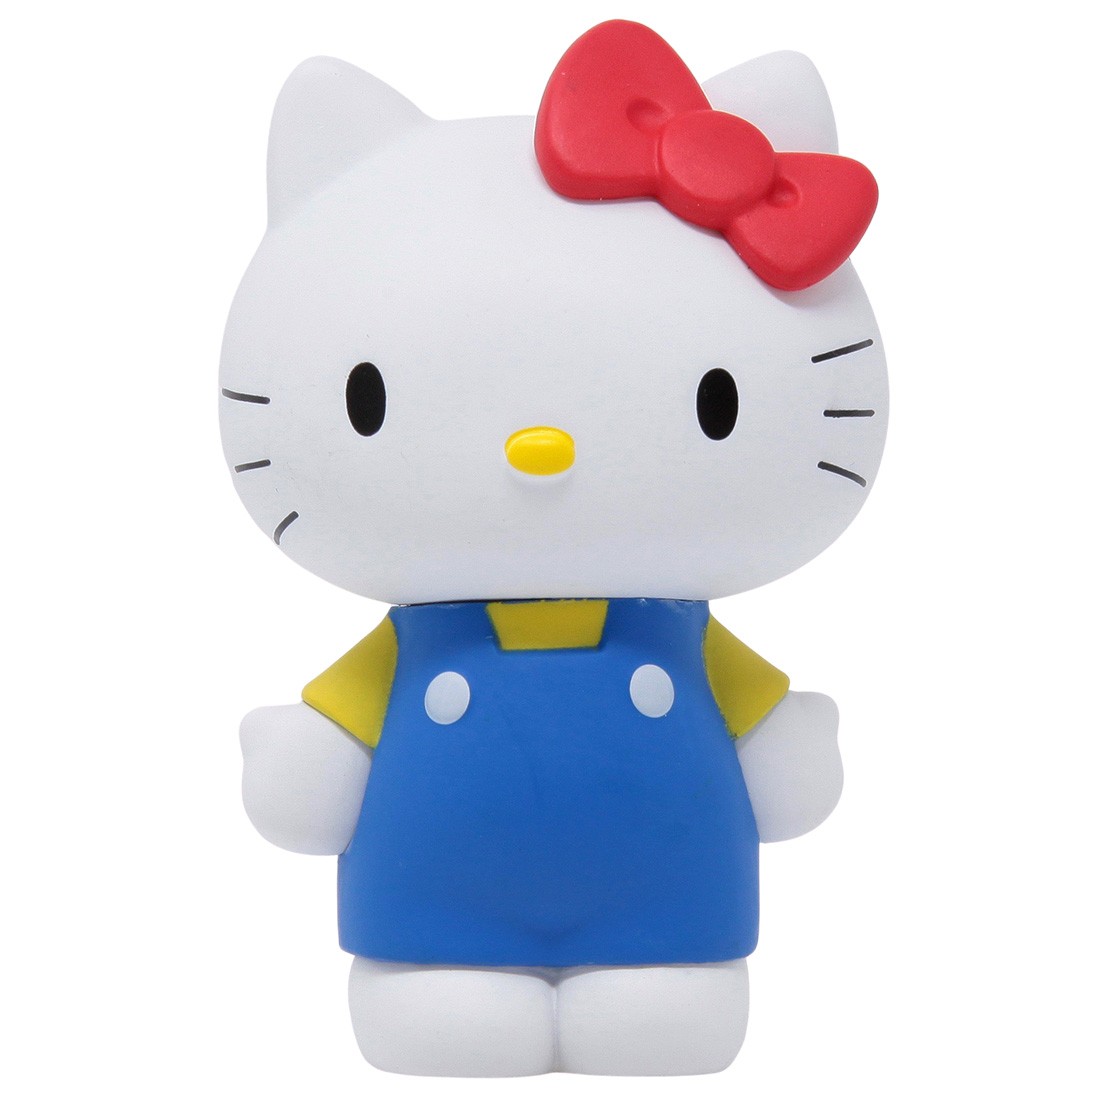 Medicom UDF Sanrio Characters Hello Kitty Figure (white)